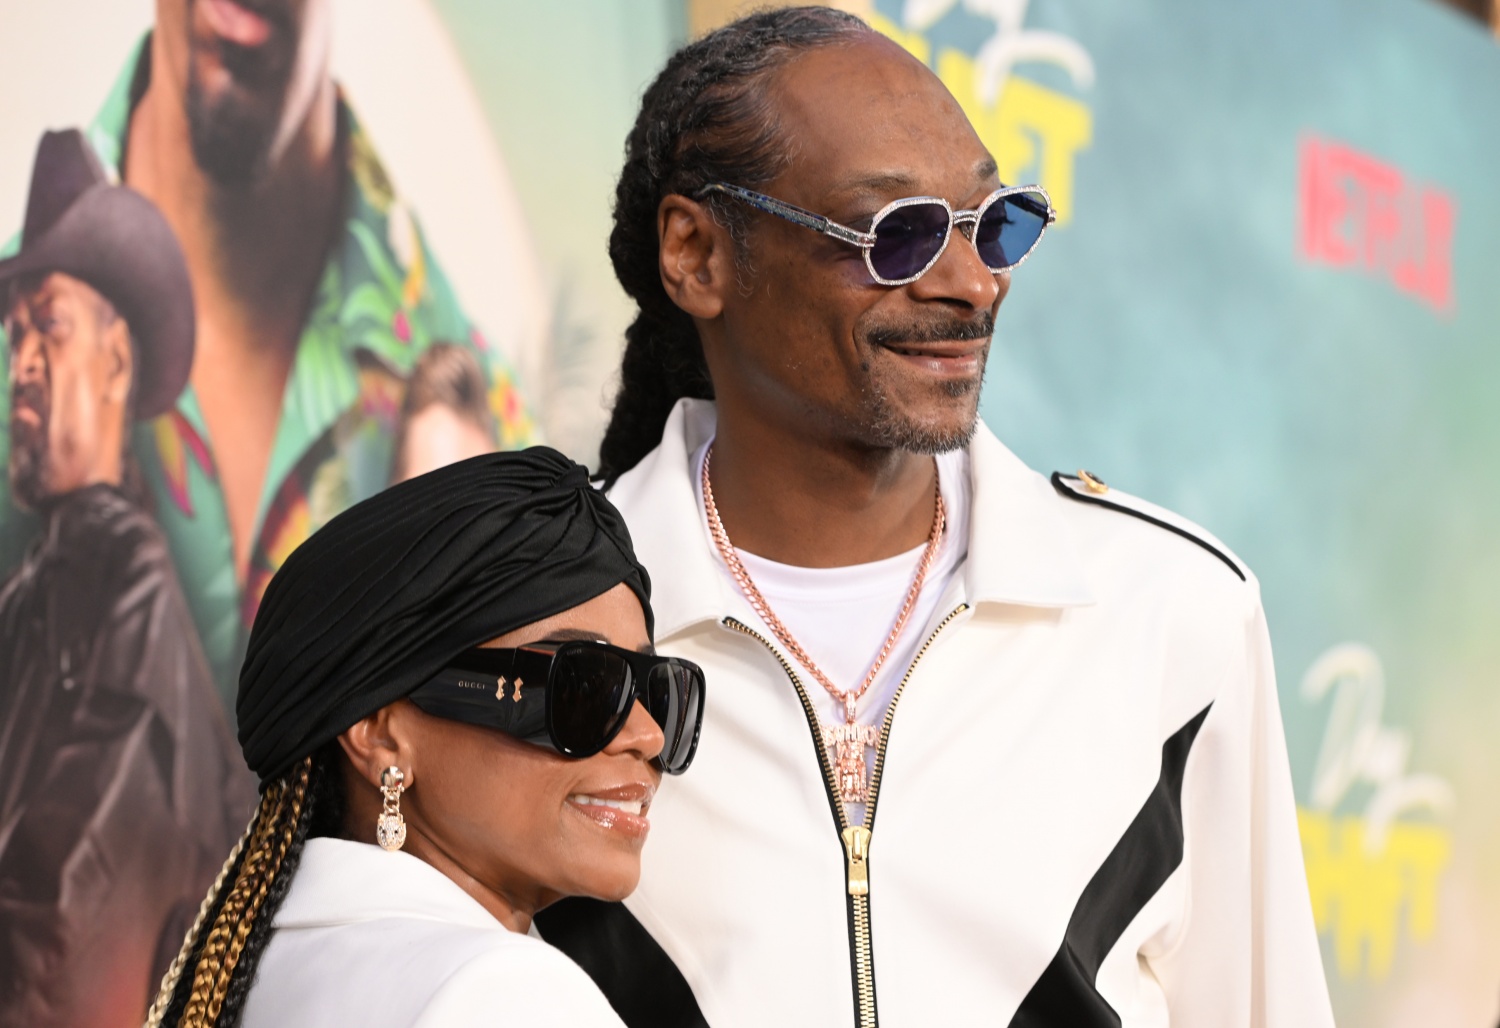 (L-R) Shante Broadus and Snoop Dogg